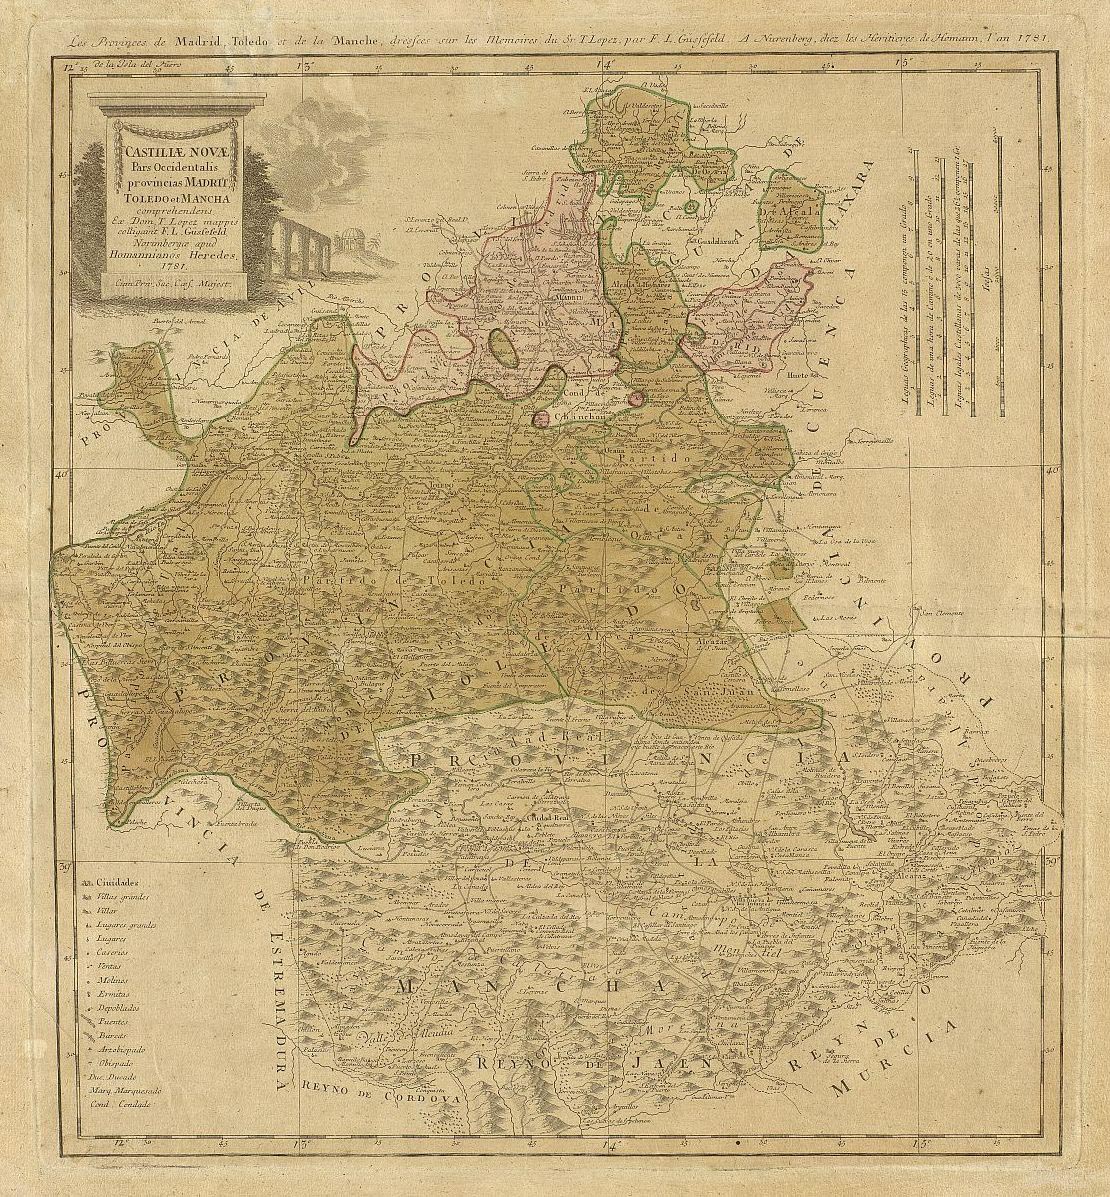 Mapa de Madrid, Toledo y La Mancha de 1781.